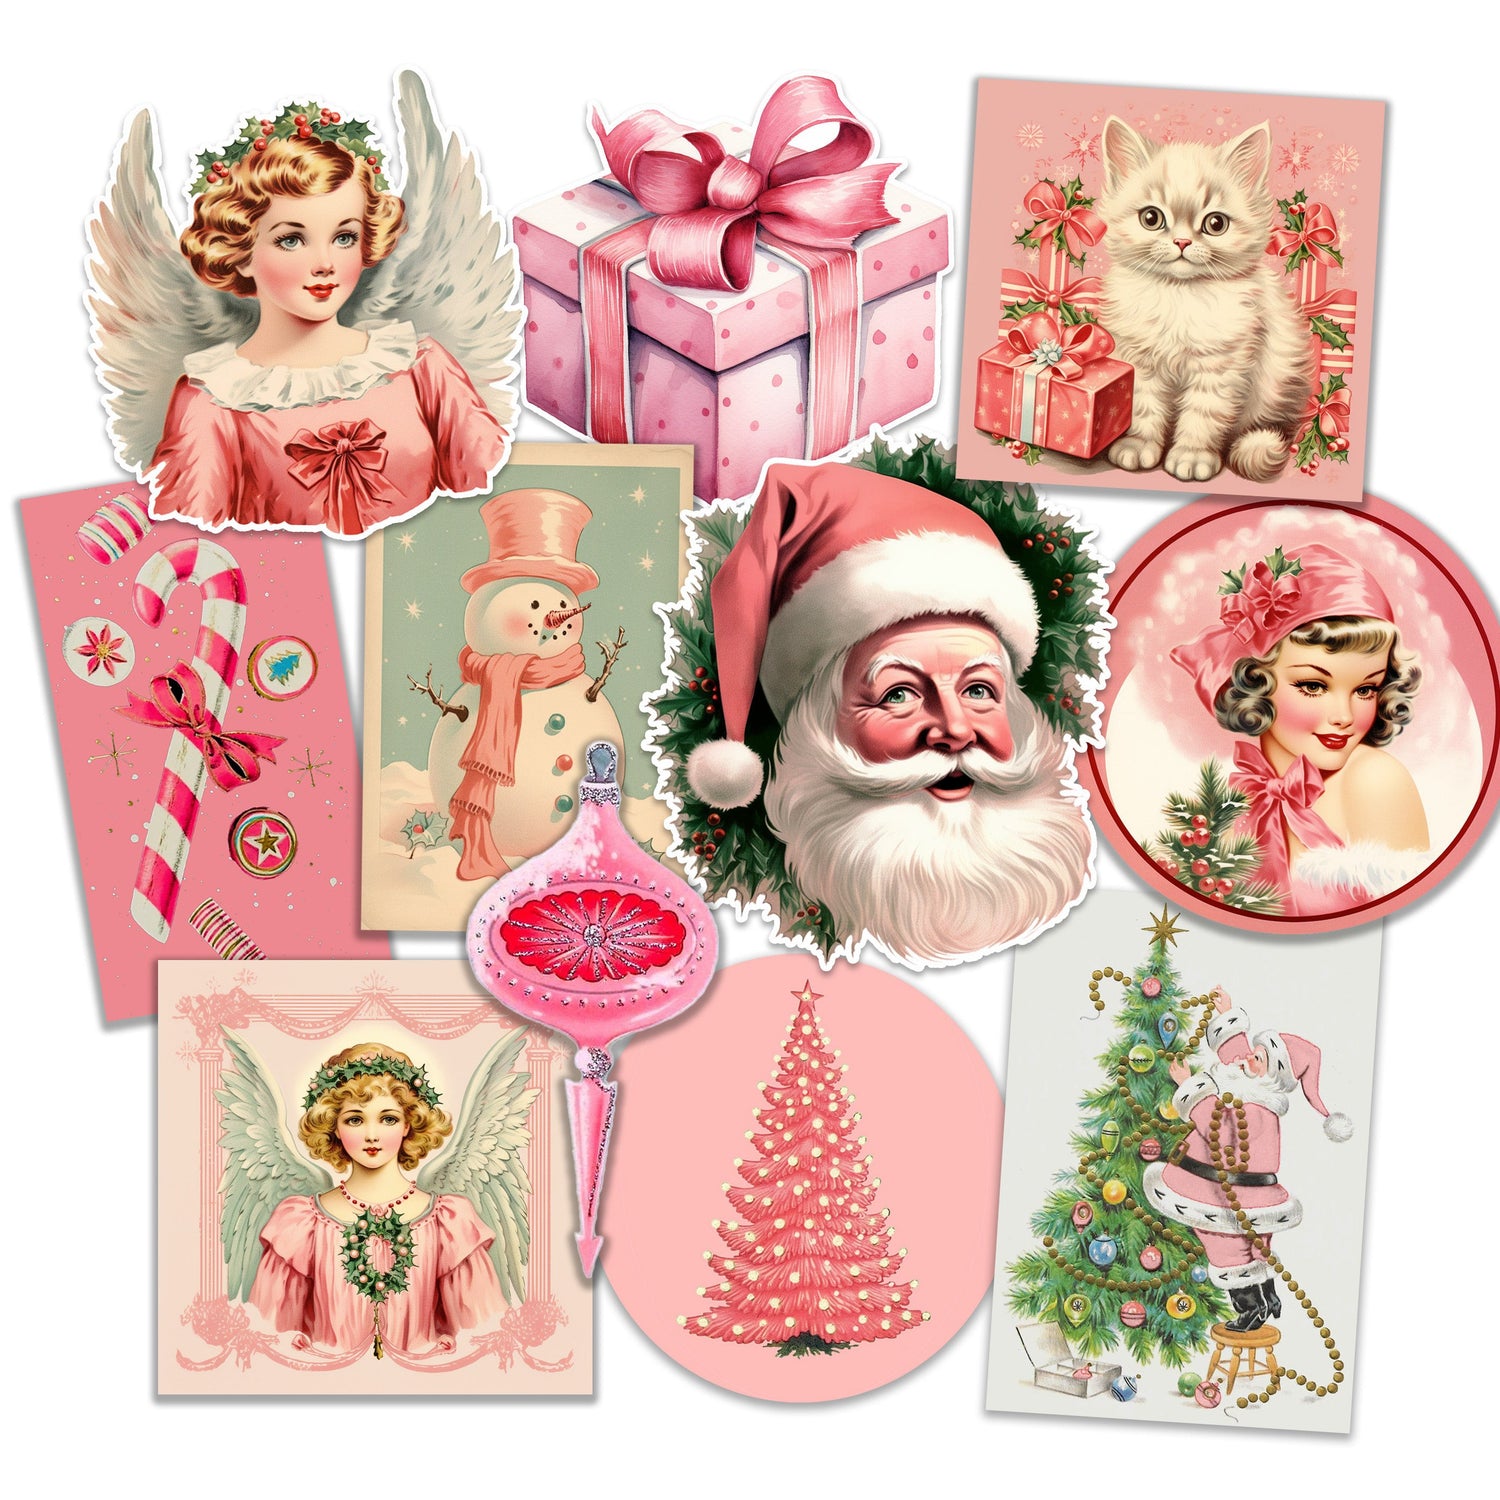 Christmas Sticker Collection  Christmas stickers printable, Christmas  stickers, Holiday stickers